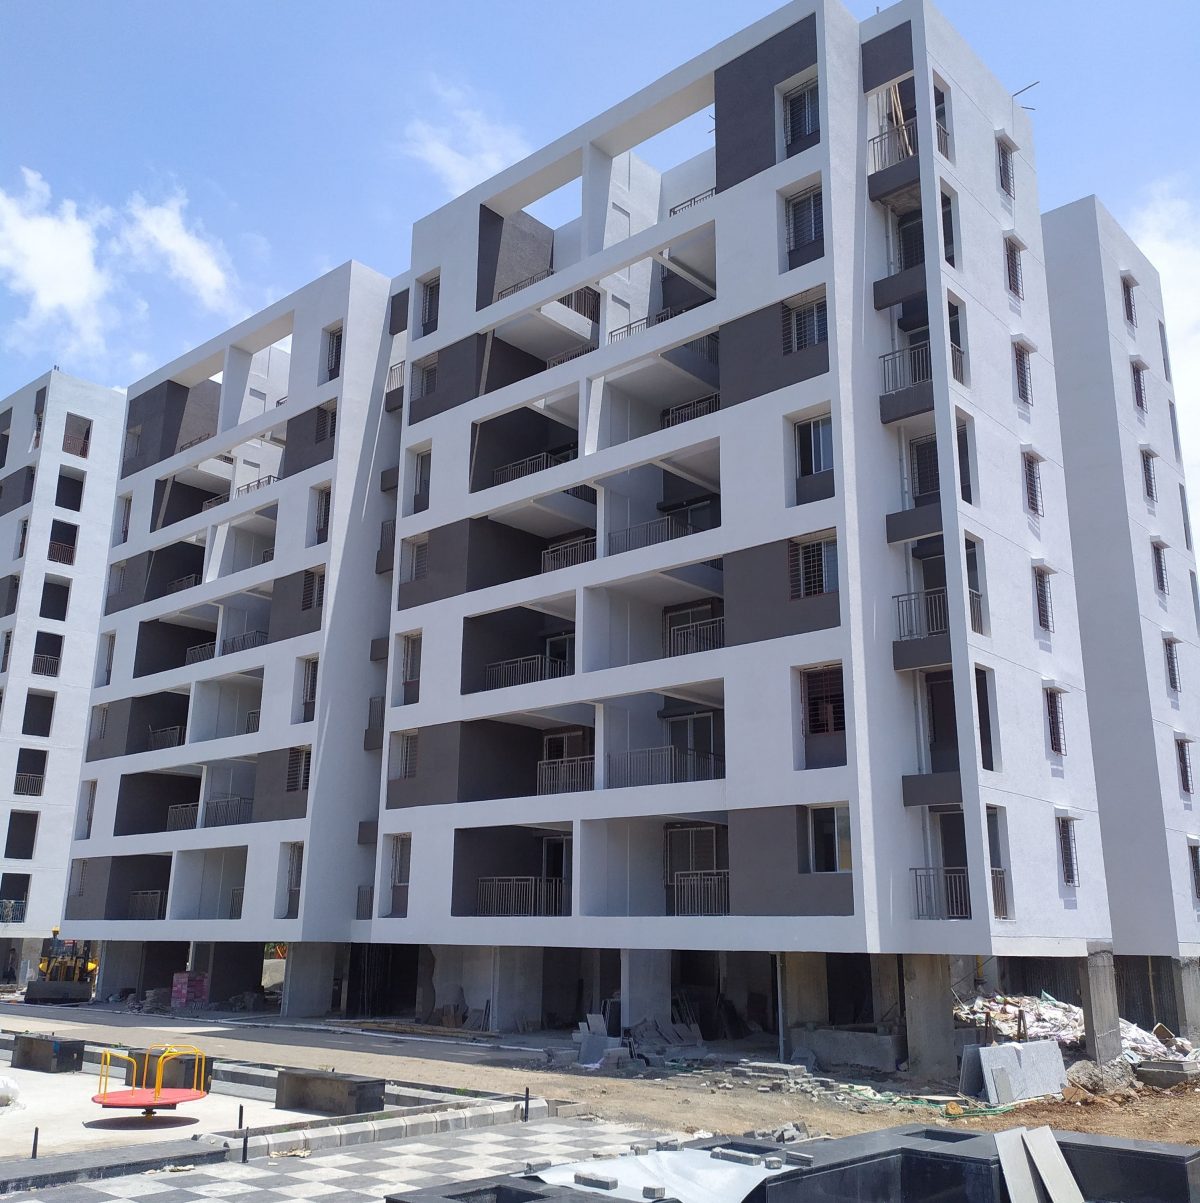 Happycity Jijamata Chowk Talegaon Dabhade, Pune Construction Updates July 2021